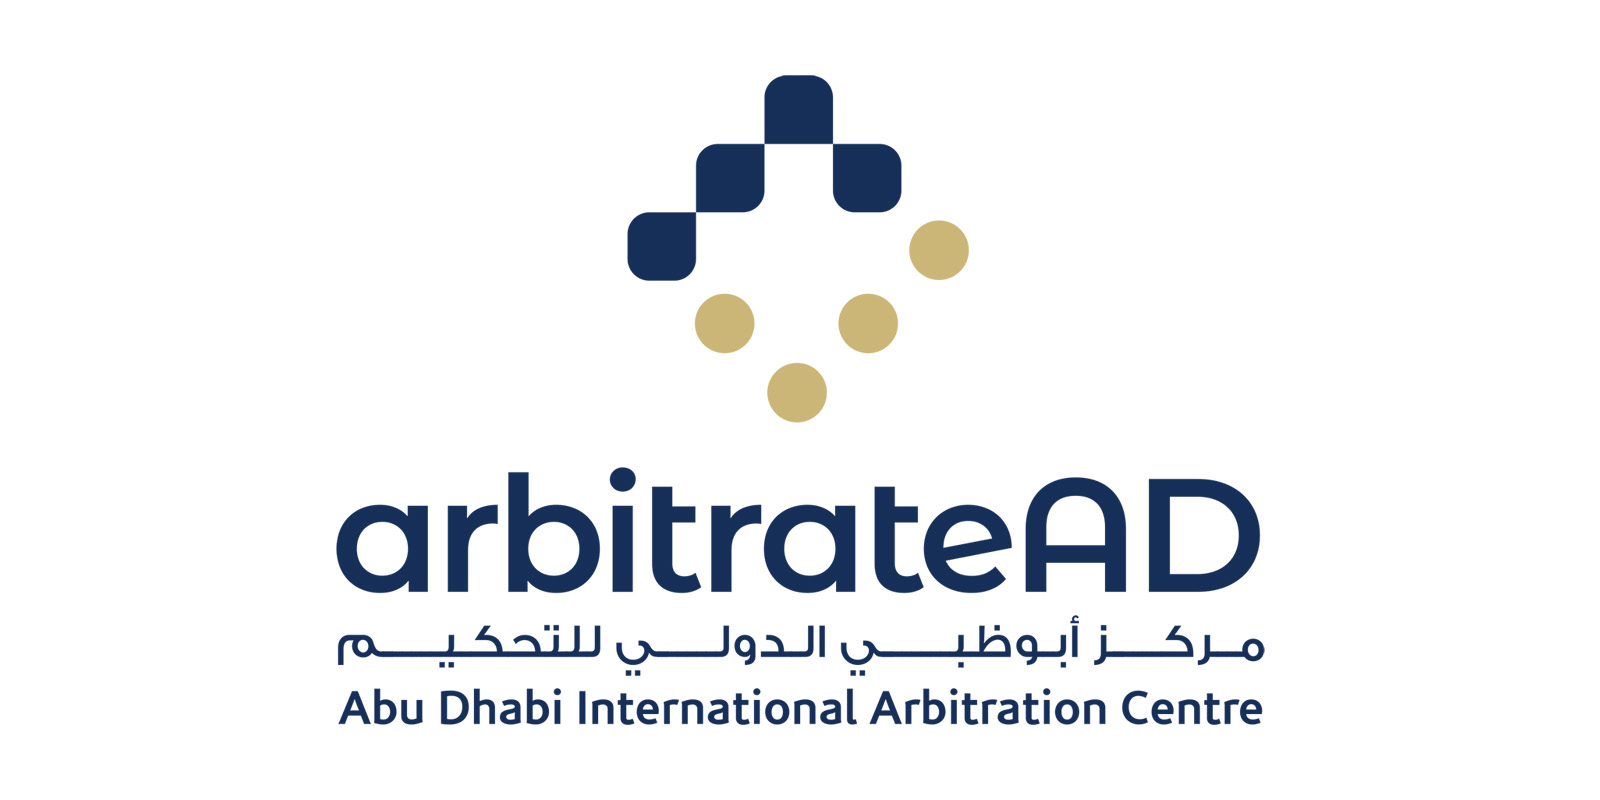 Abu Dhabi Chamber launches the Abu Dhabi International Arbitration Centre (arbitrateAD)